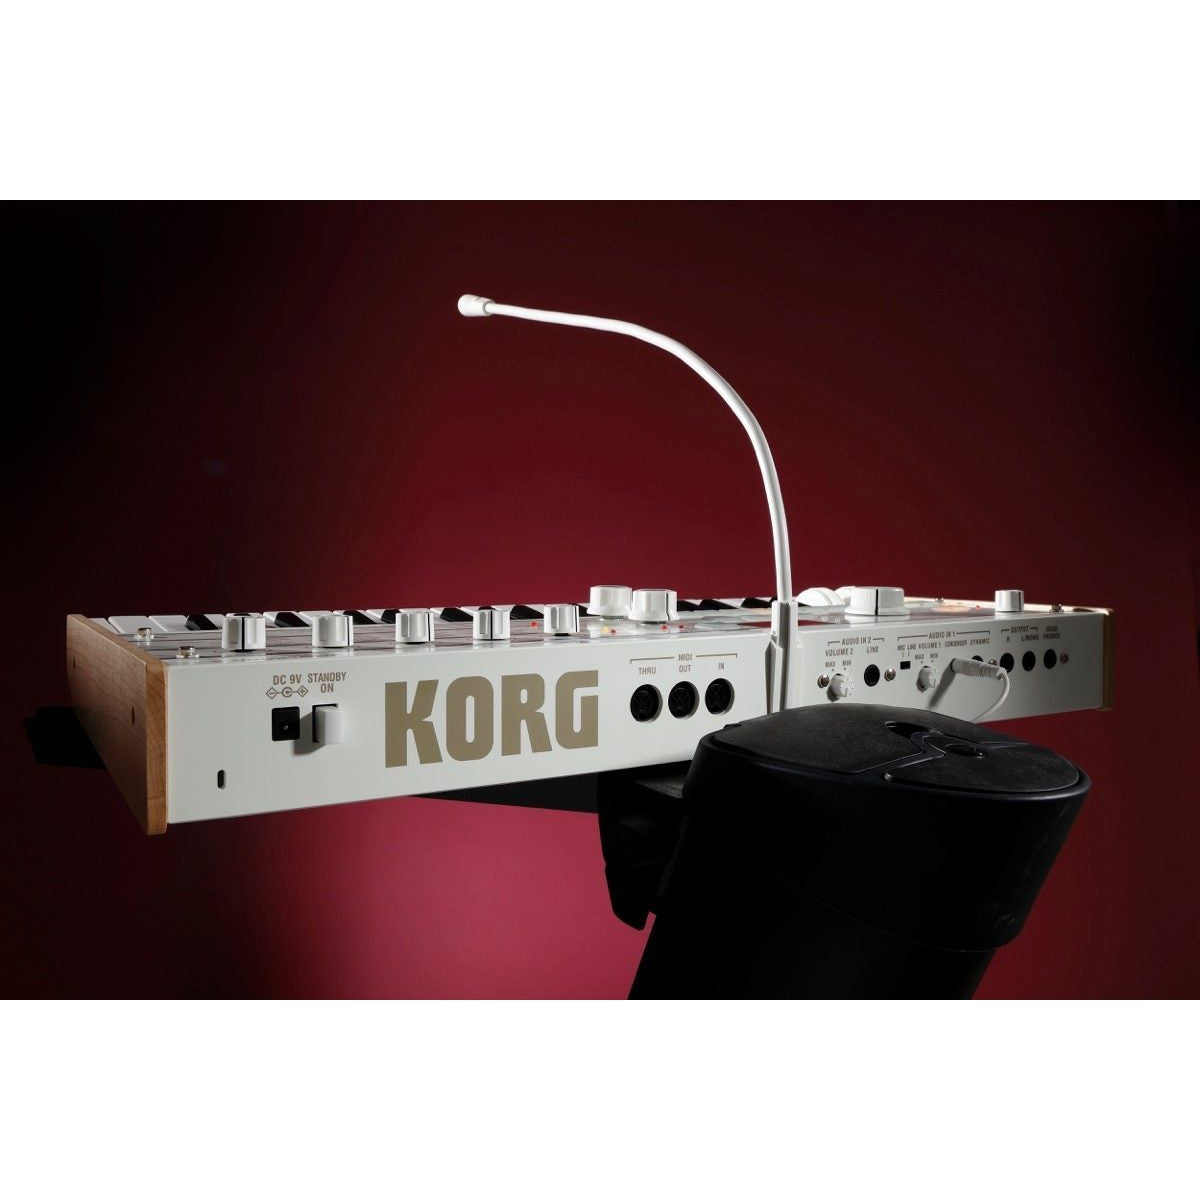 Korg microKorg-S Analog-Modeling Synthesizer and Vocoder Keyboard